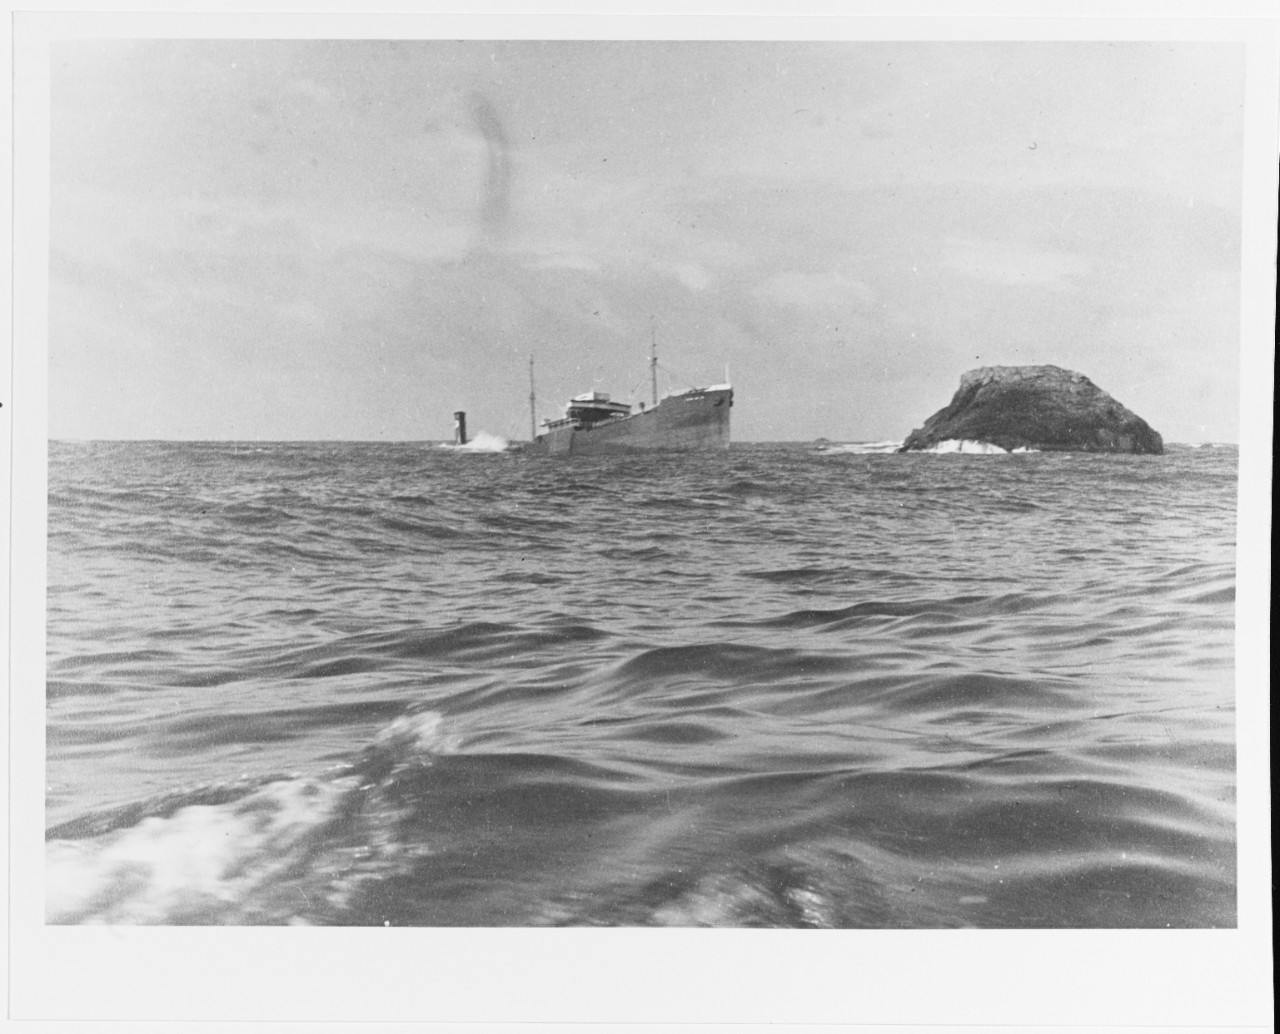 S.S. EMIDIO (American Merchant Tanker, 1919-1941)